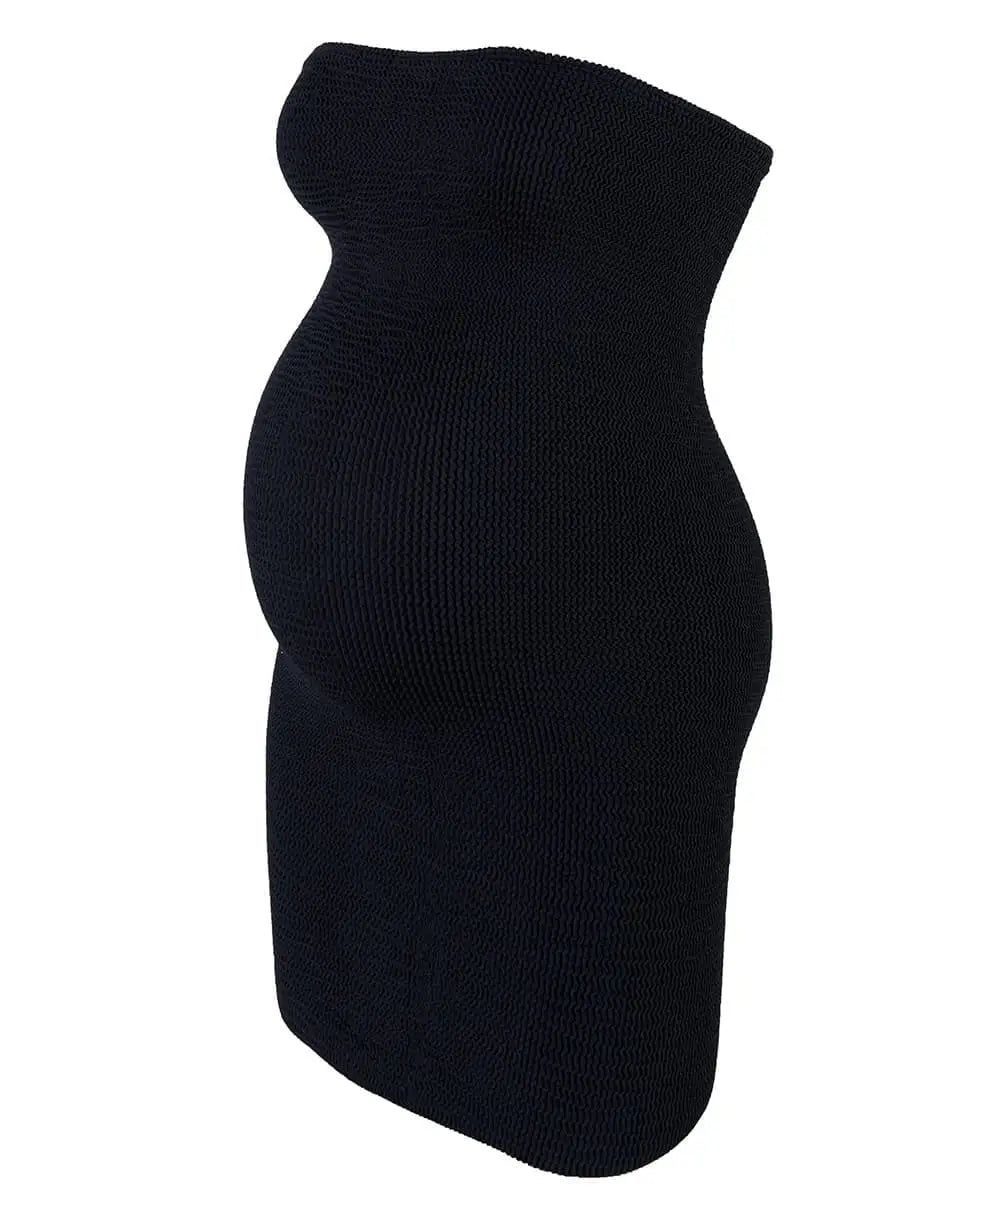 Maternity modular tube dress Bayside black